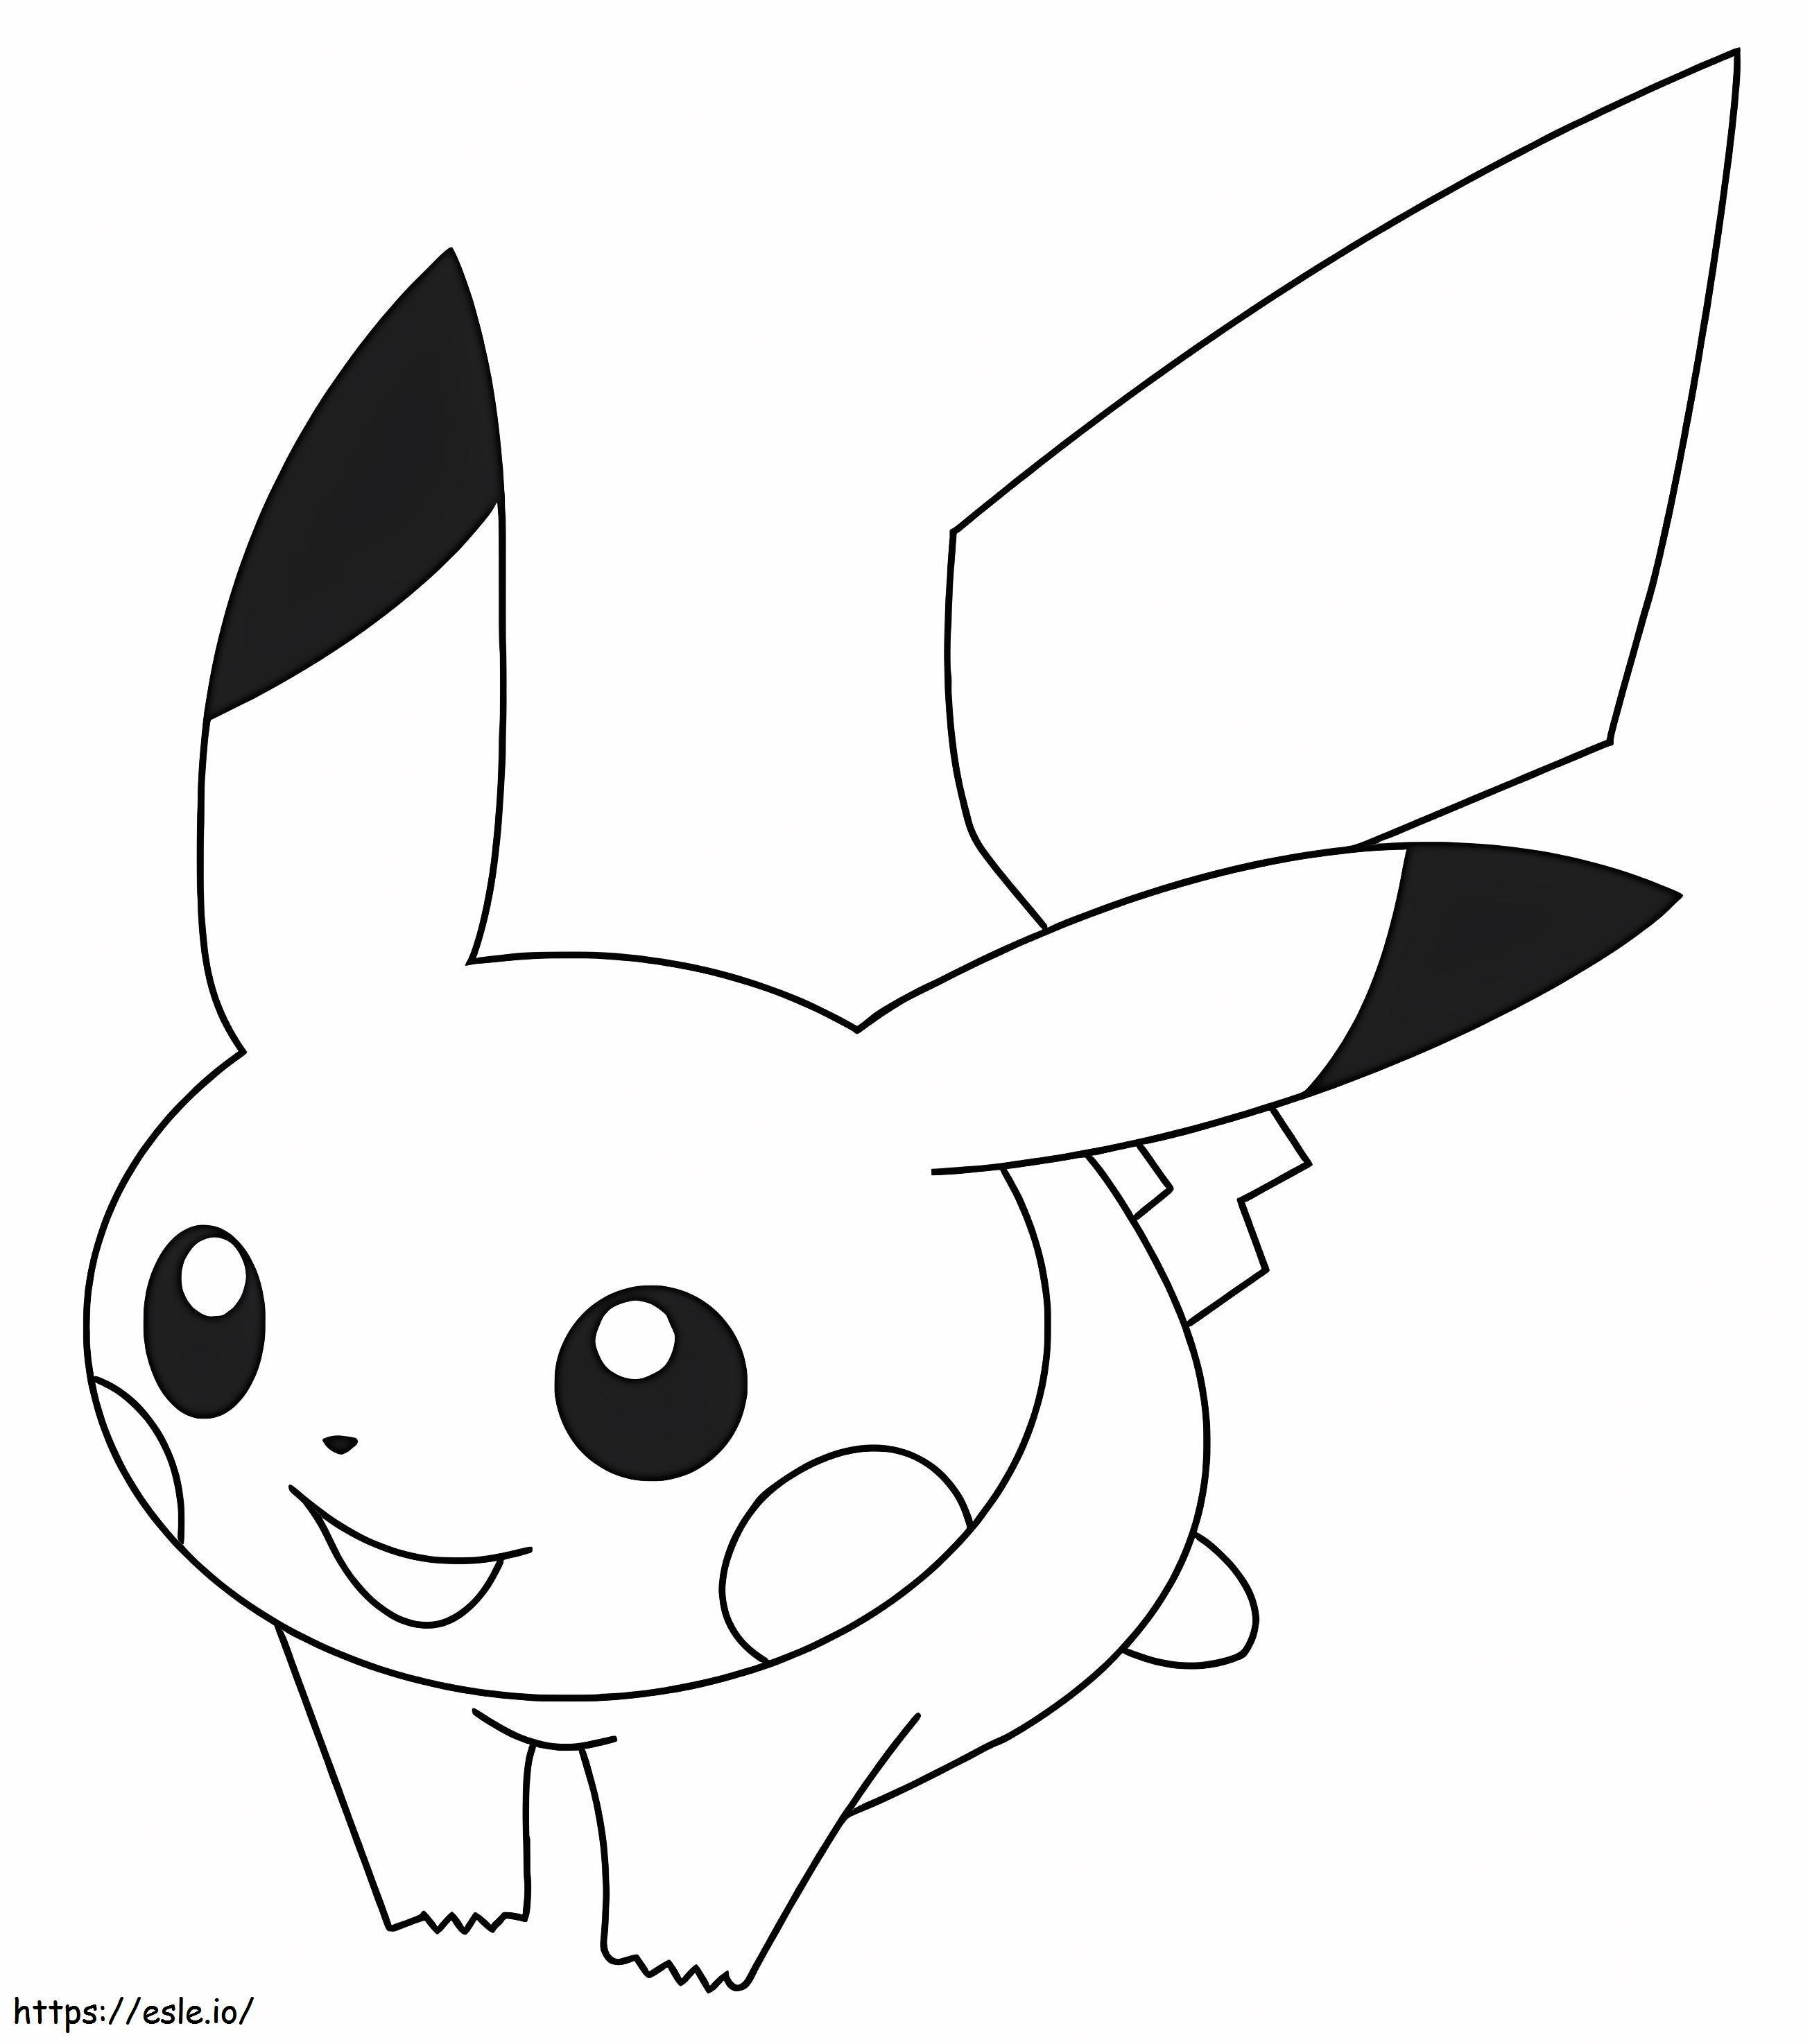 Kawaii Pikachu ausmalbilder